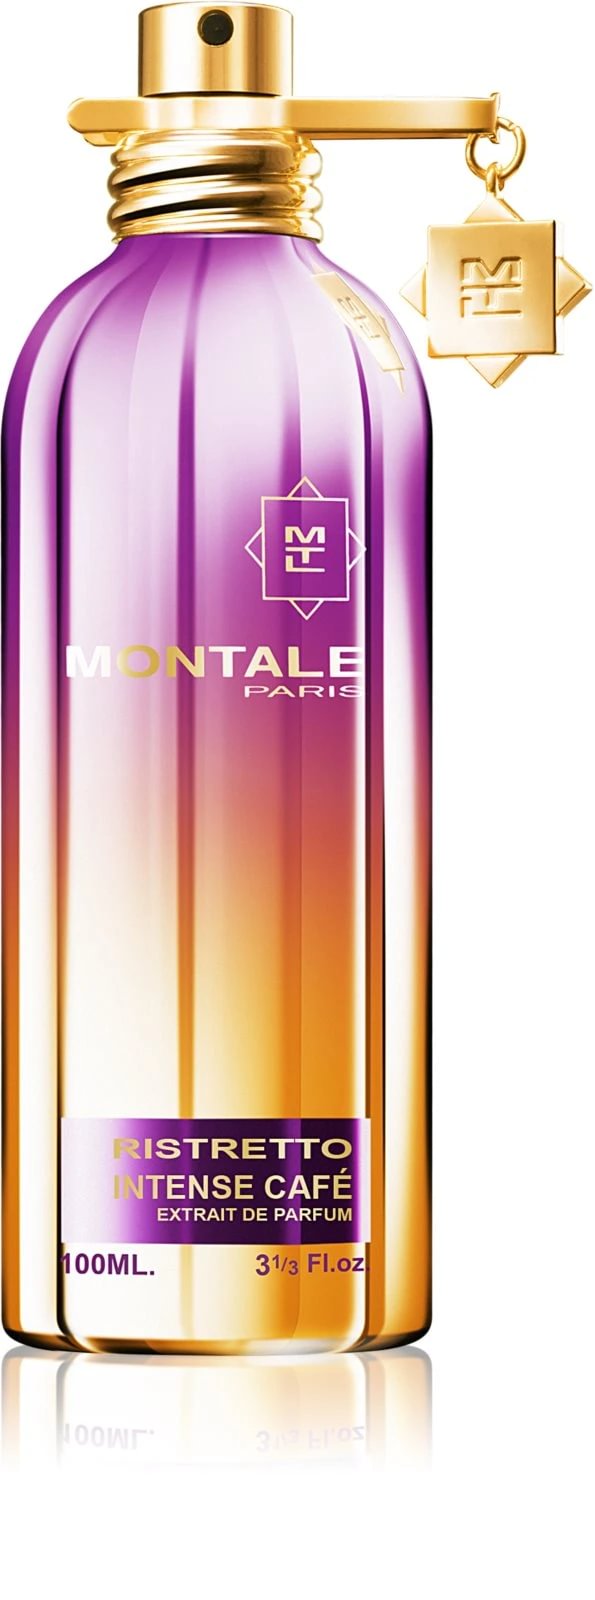 Montale Intense Cafe Ristretto парфюмированная вода 100мл